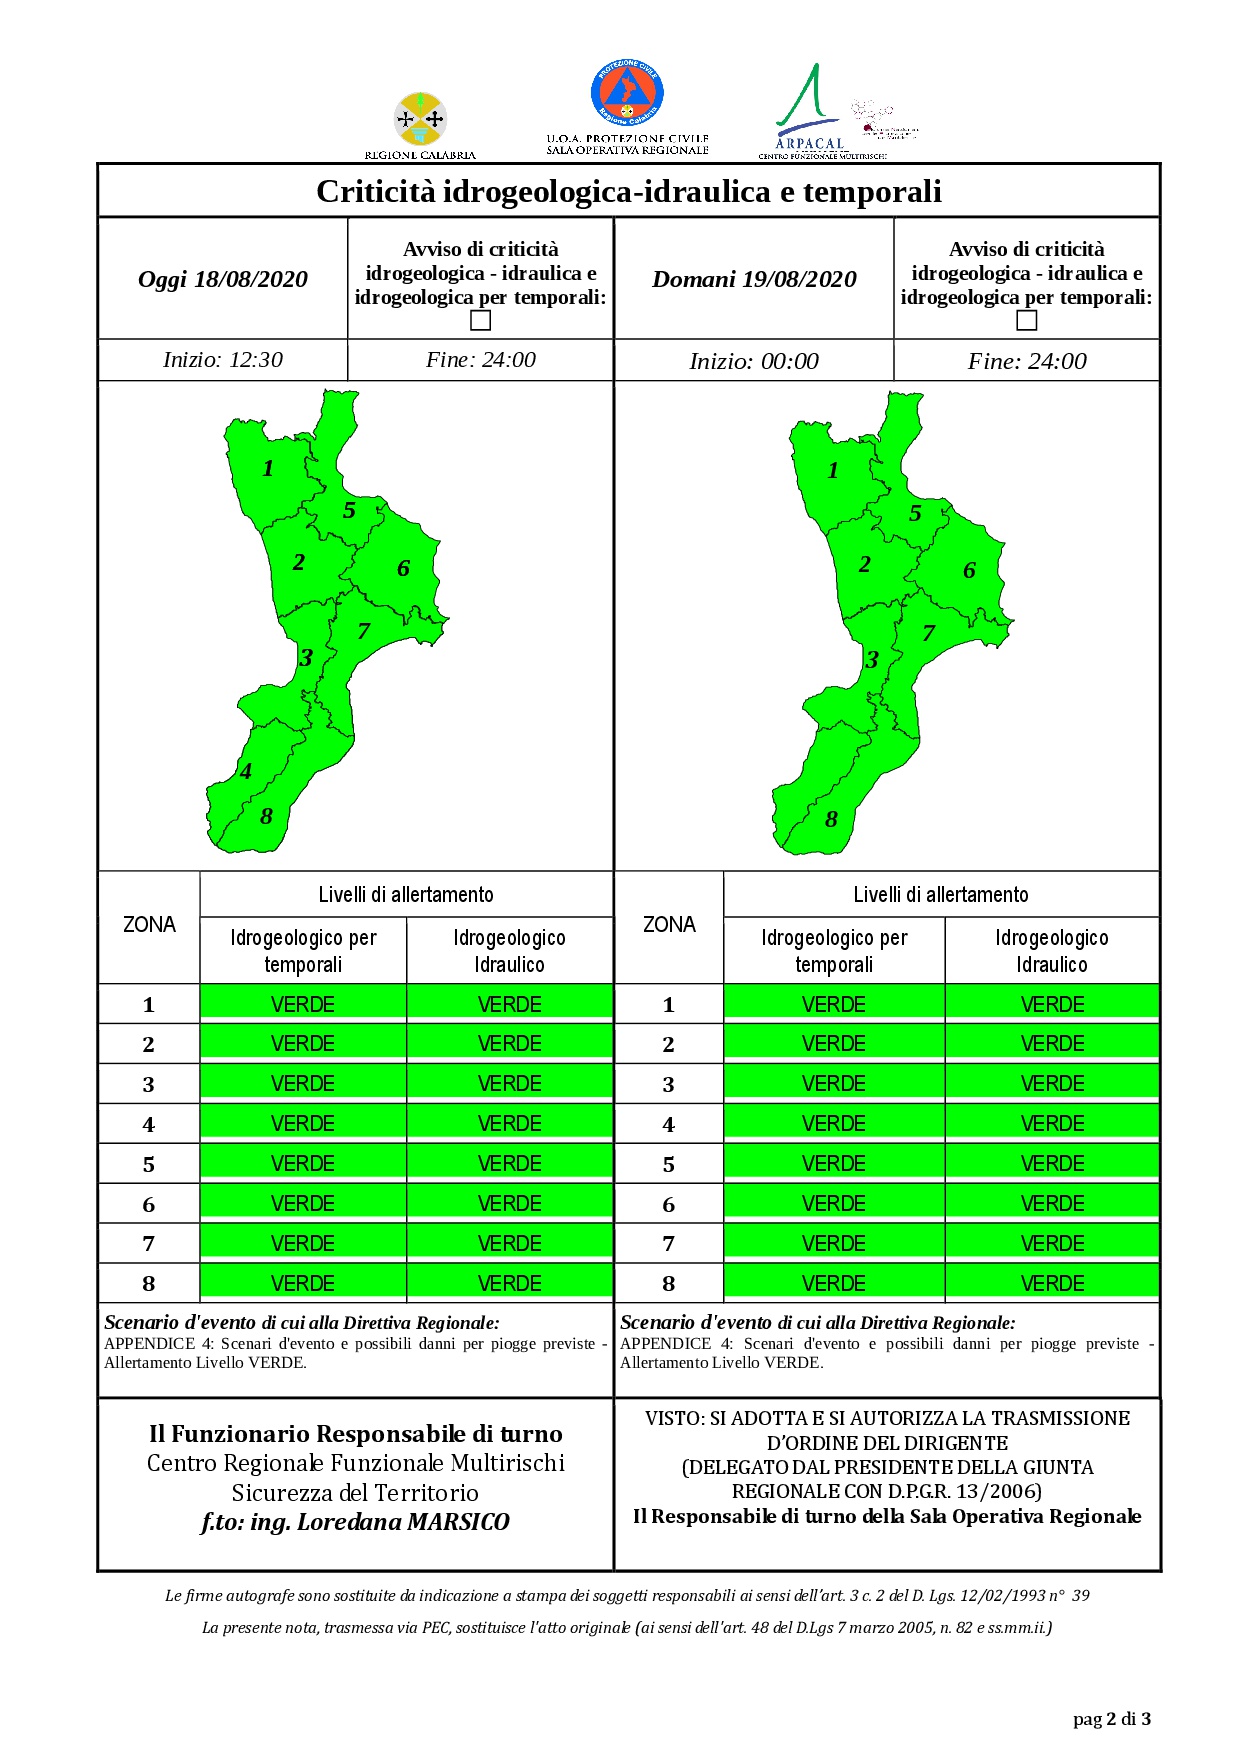 Criticità idrogeologica-idraulica e temporali in Calabria 18-08-2020